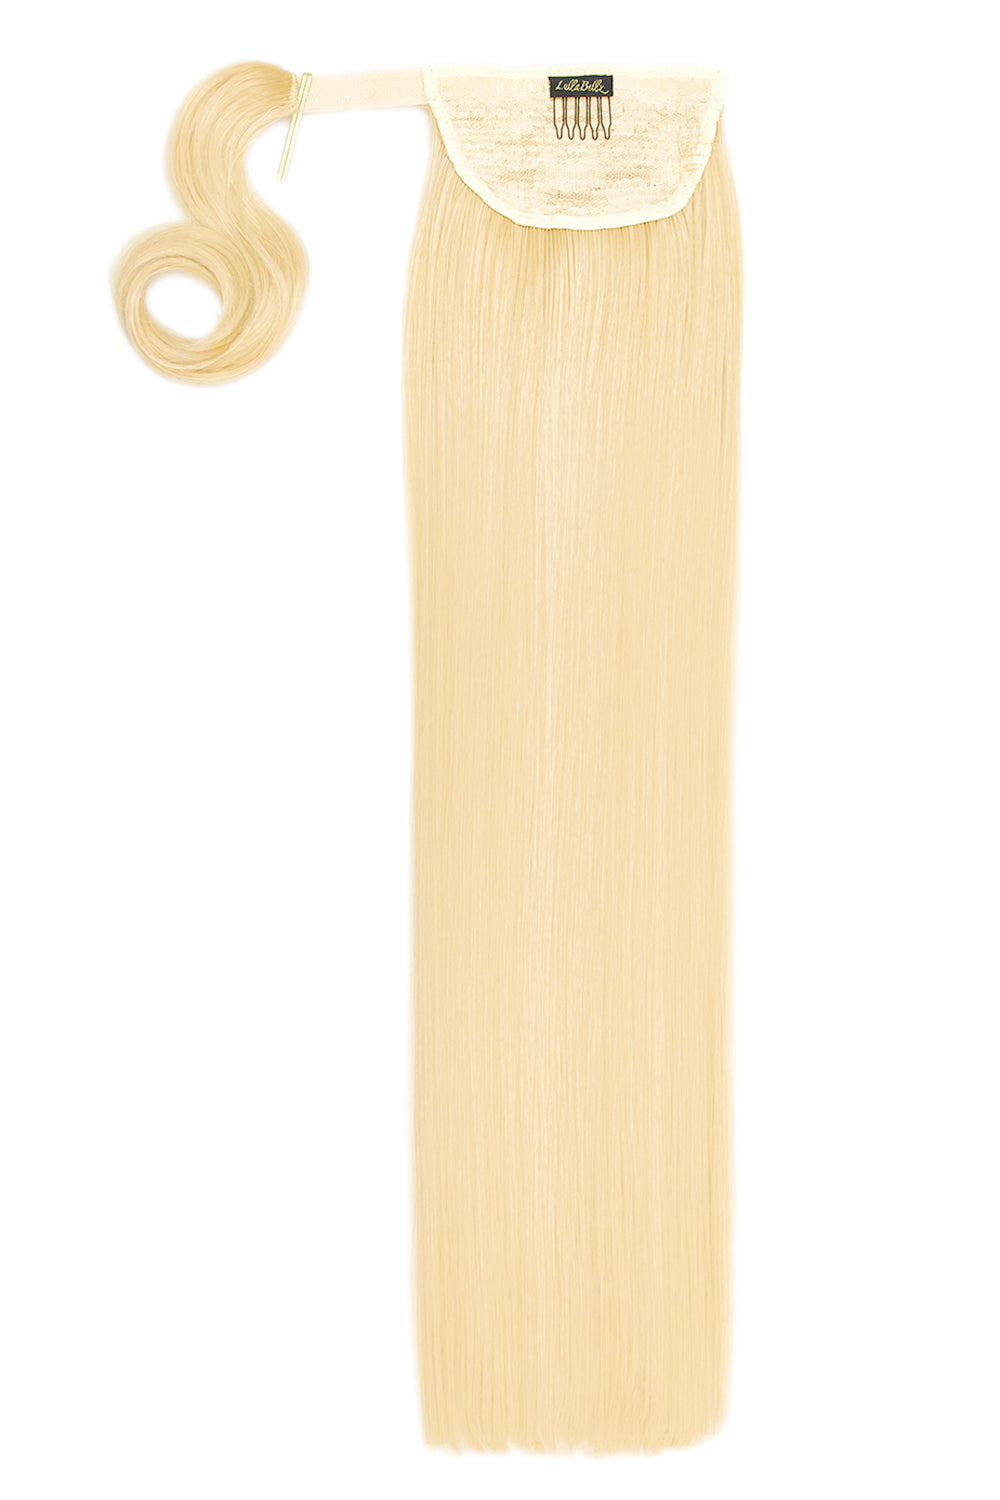 Grande Lengths 26" Straight Wraparound Ponytail - Pure Blonde